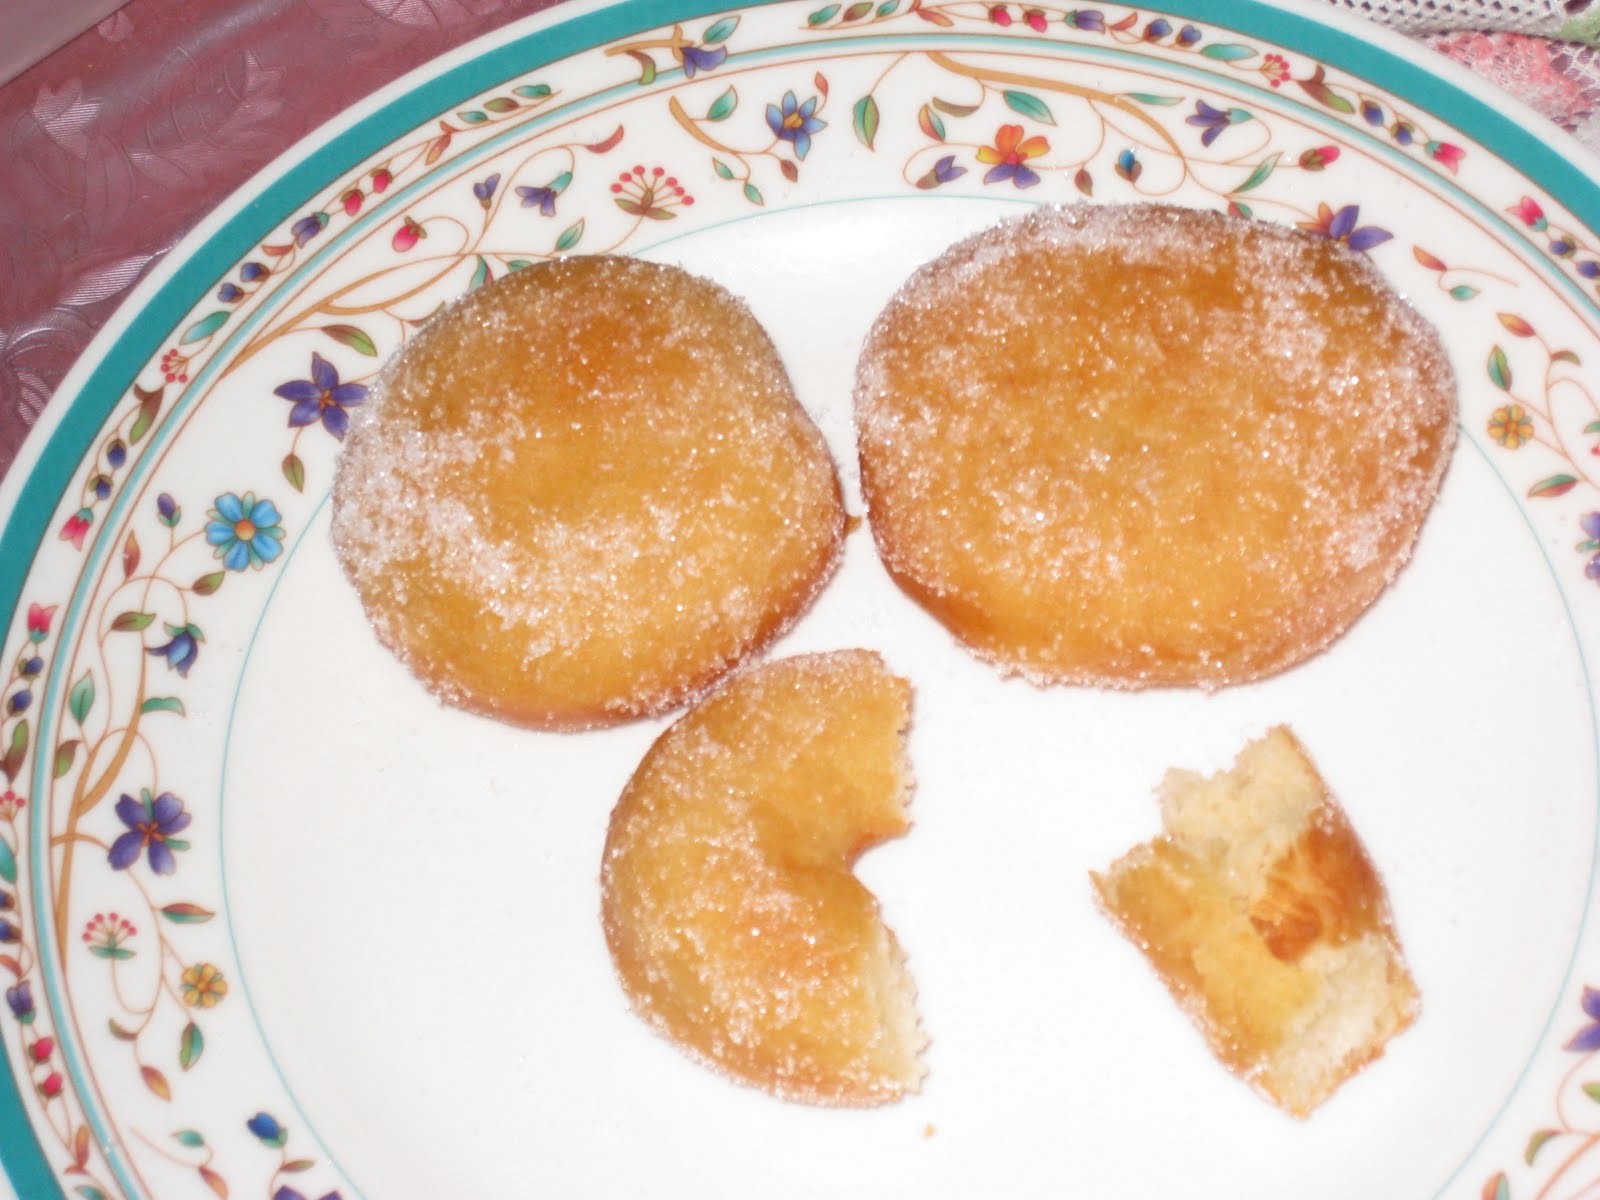 LifE Is BeaUtiFuL: Donut Ala2 Big Apple